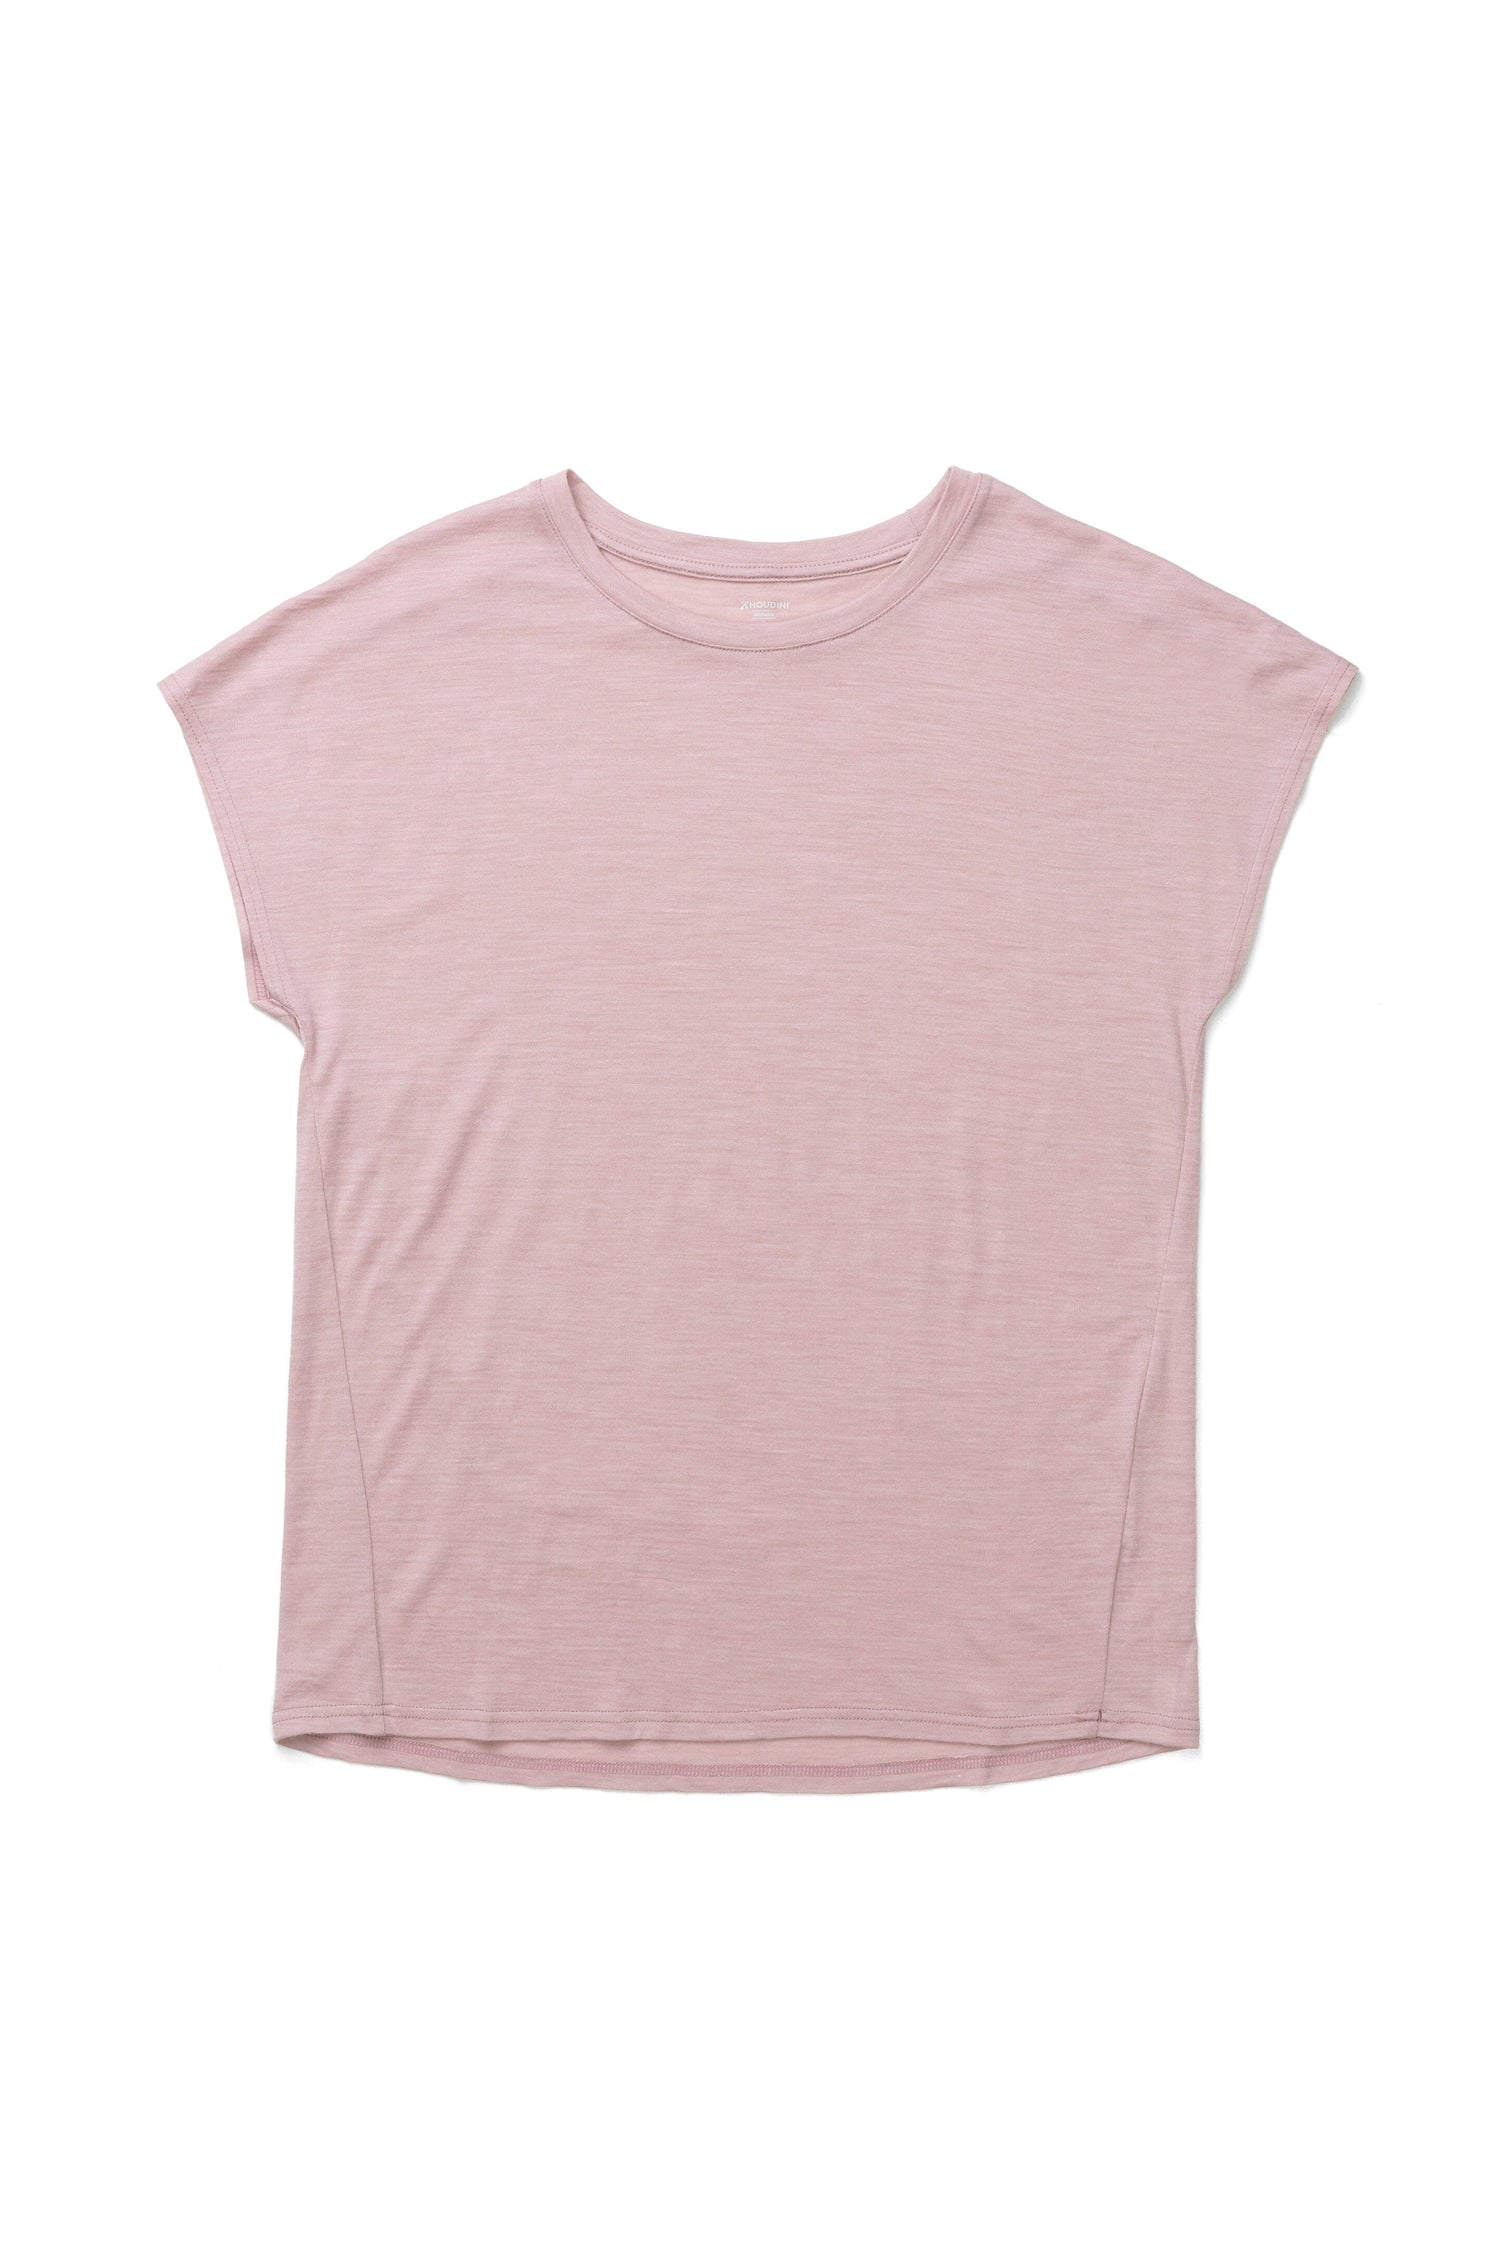 Houdini W's Activist Tee - Merino wool and Tencel Pink Moon Shirt